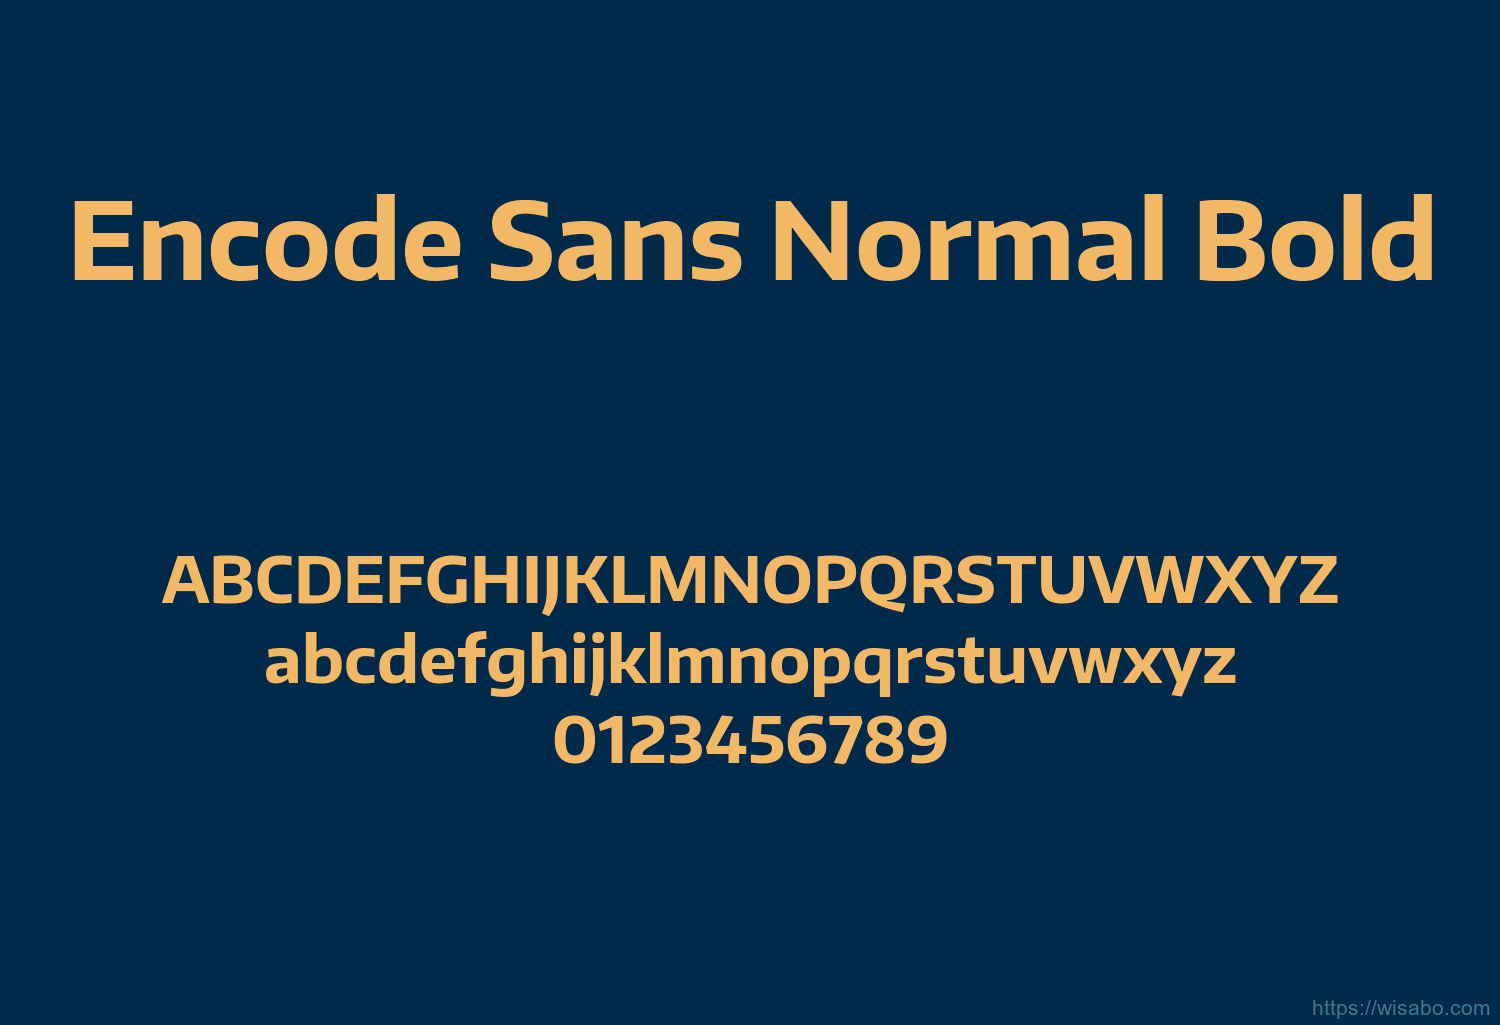 Encode Sans Normal Bold